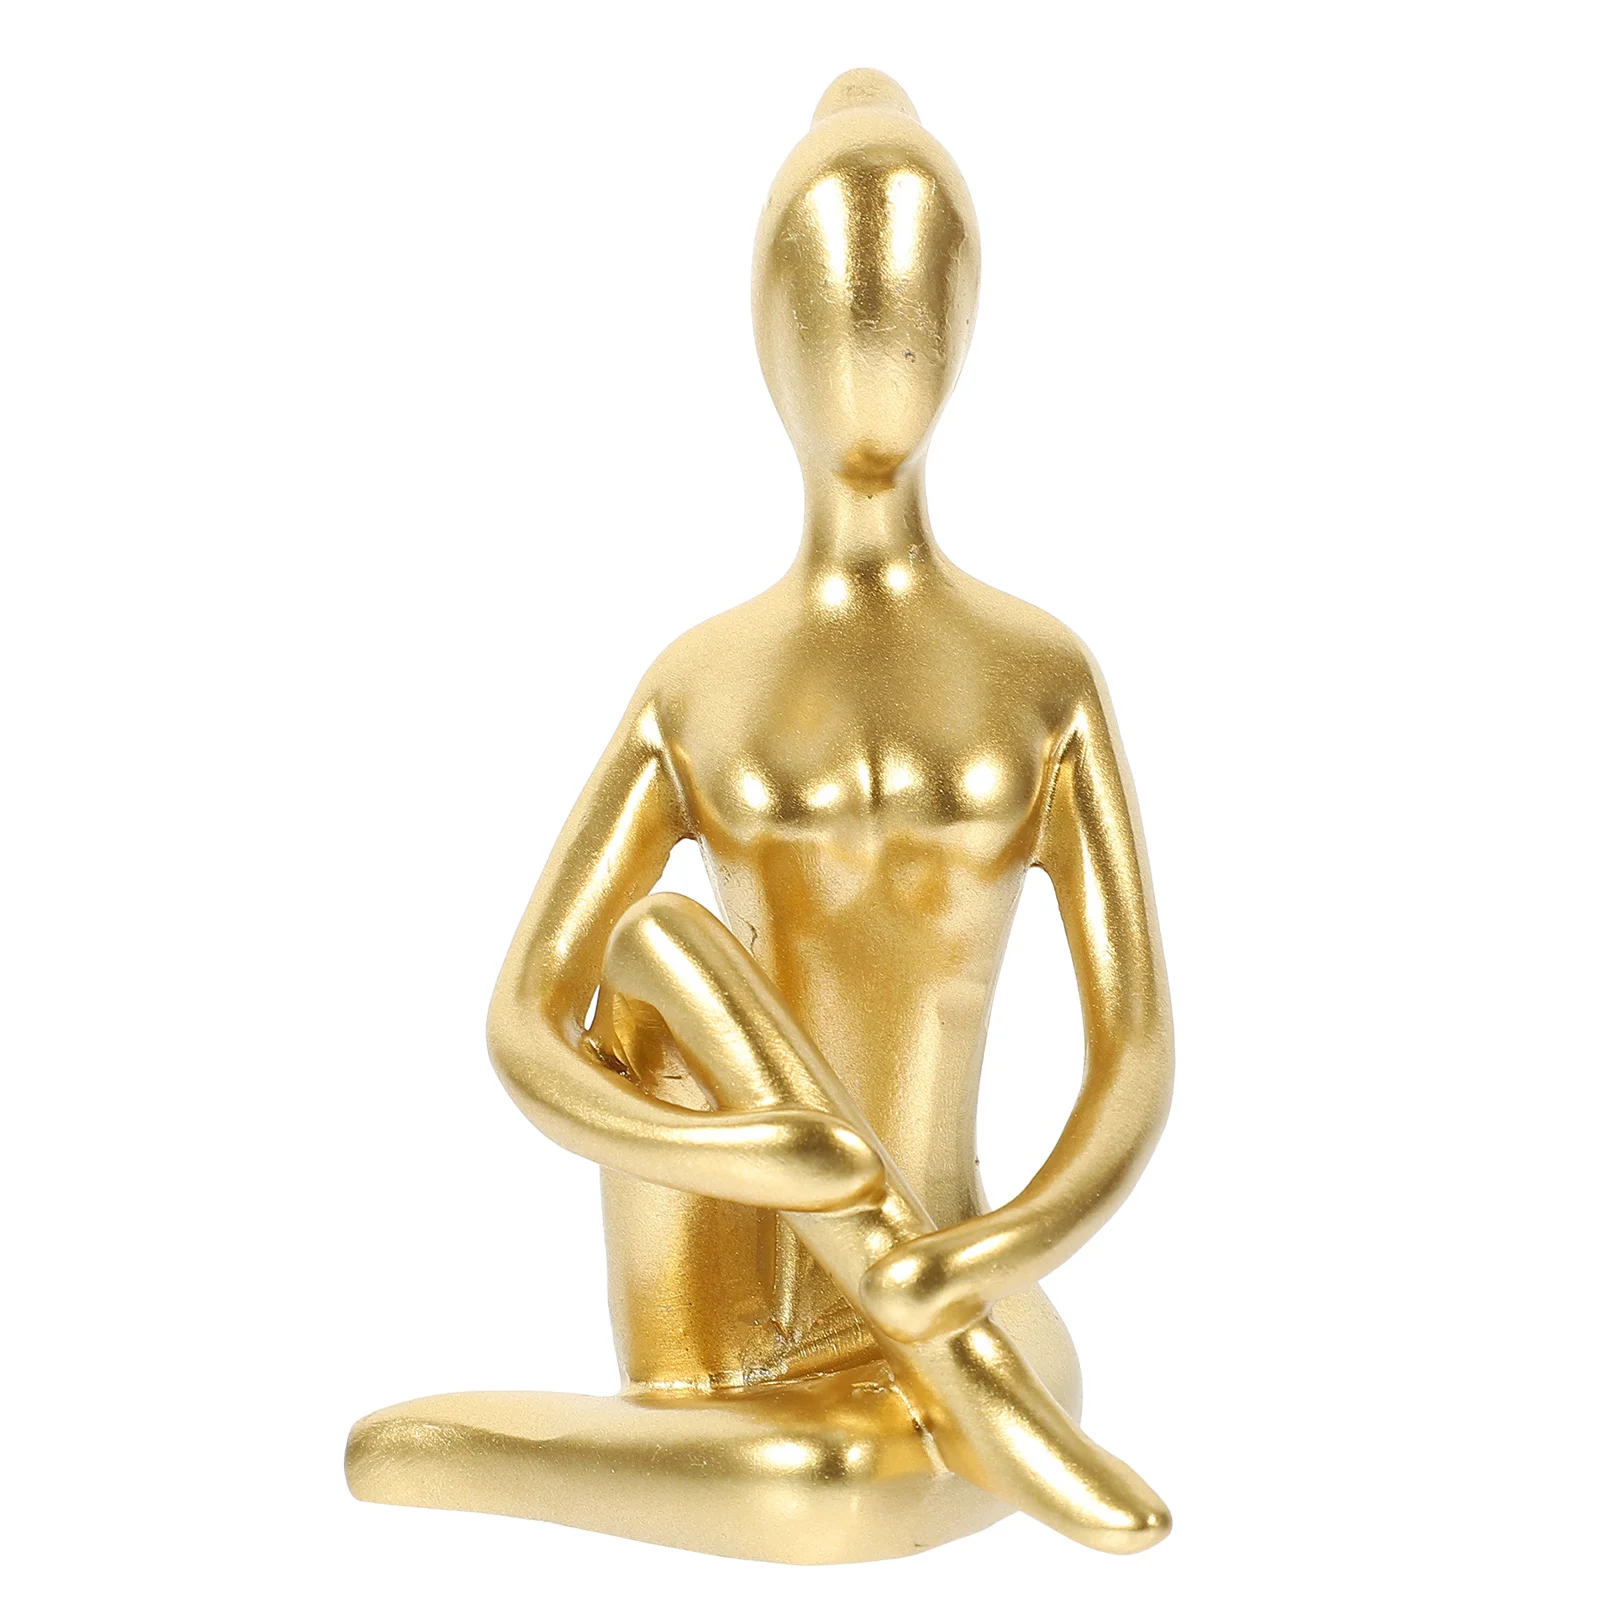 

Yoga Figurine Statue Girl Meditation Sculpture Figurines Figure Decor Pose Decorationabstract Zen Statues Desktop Body